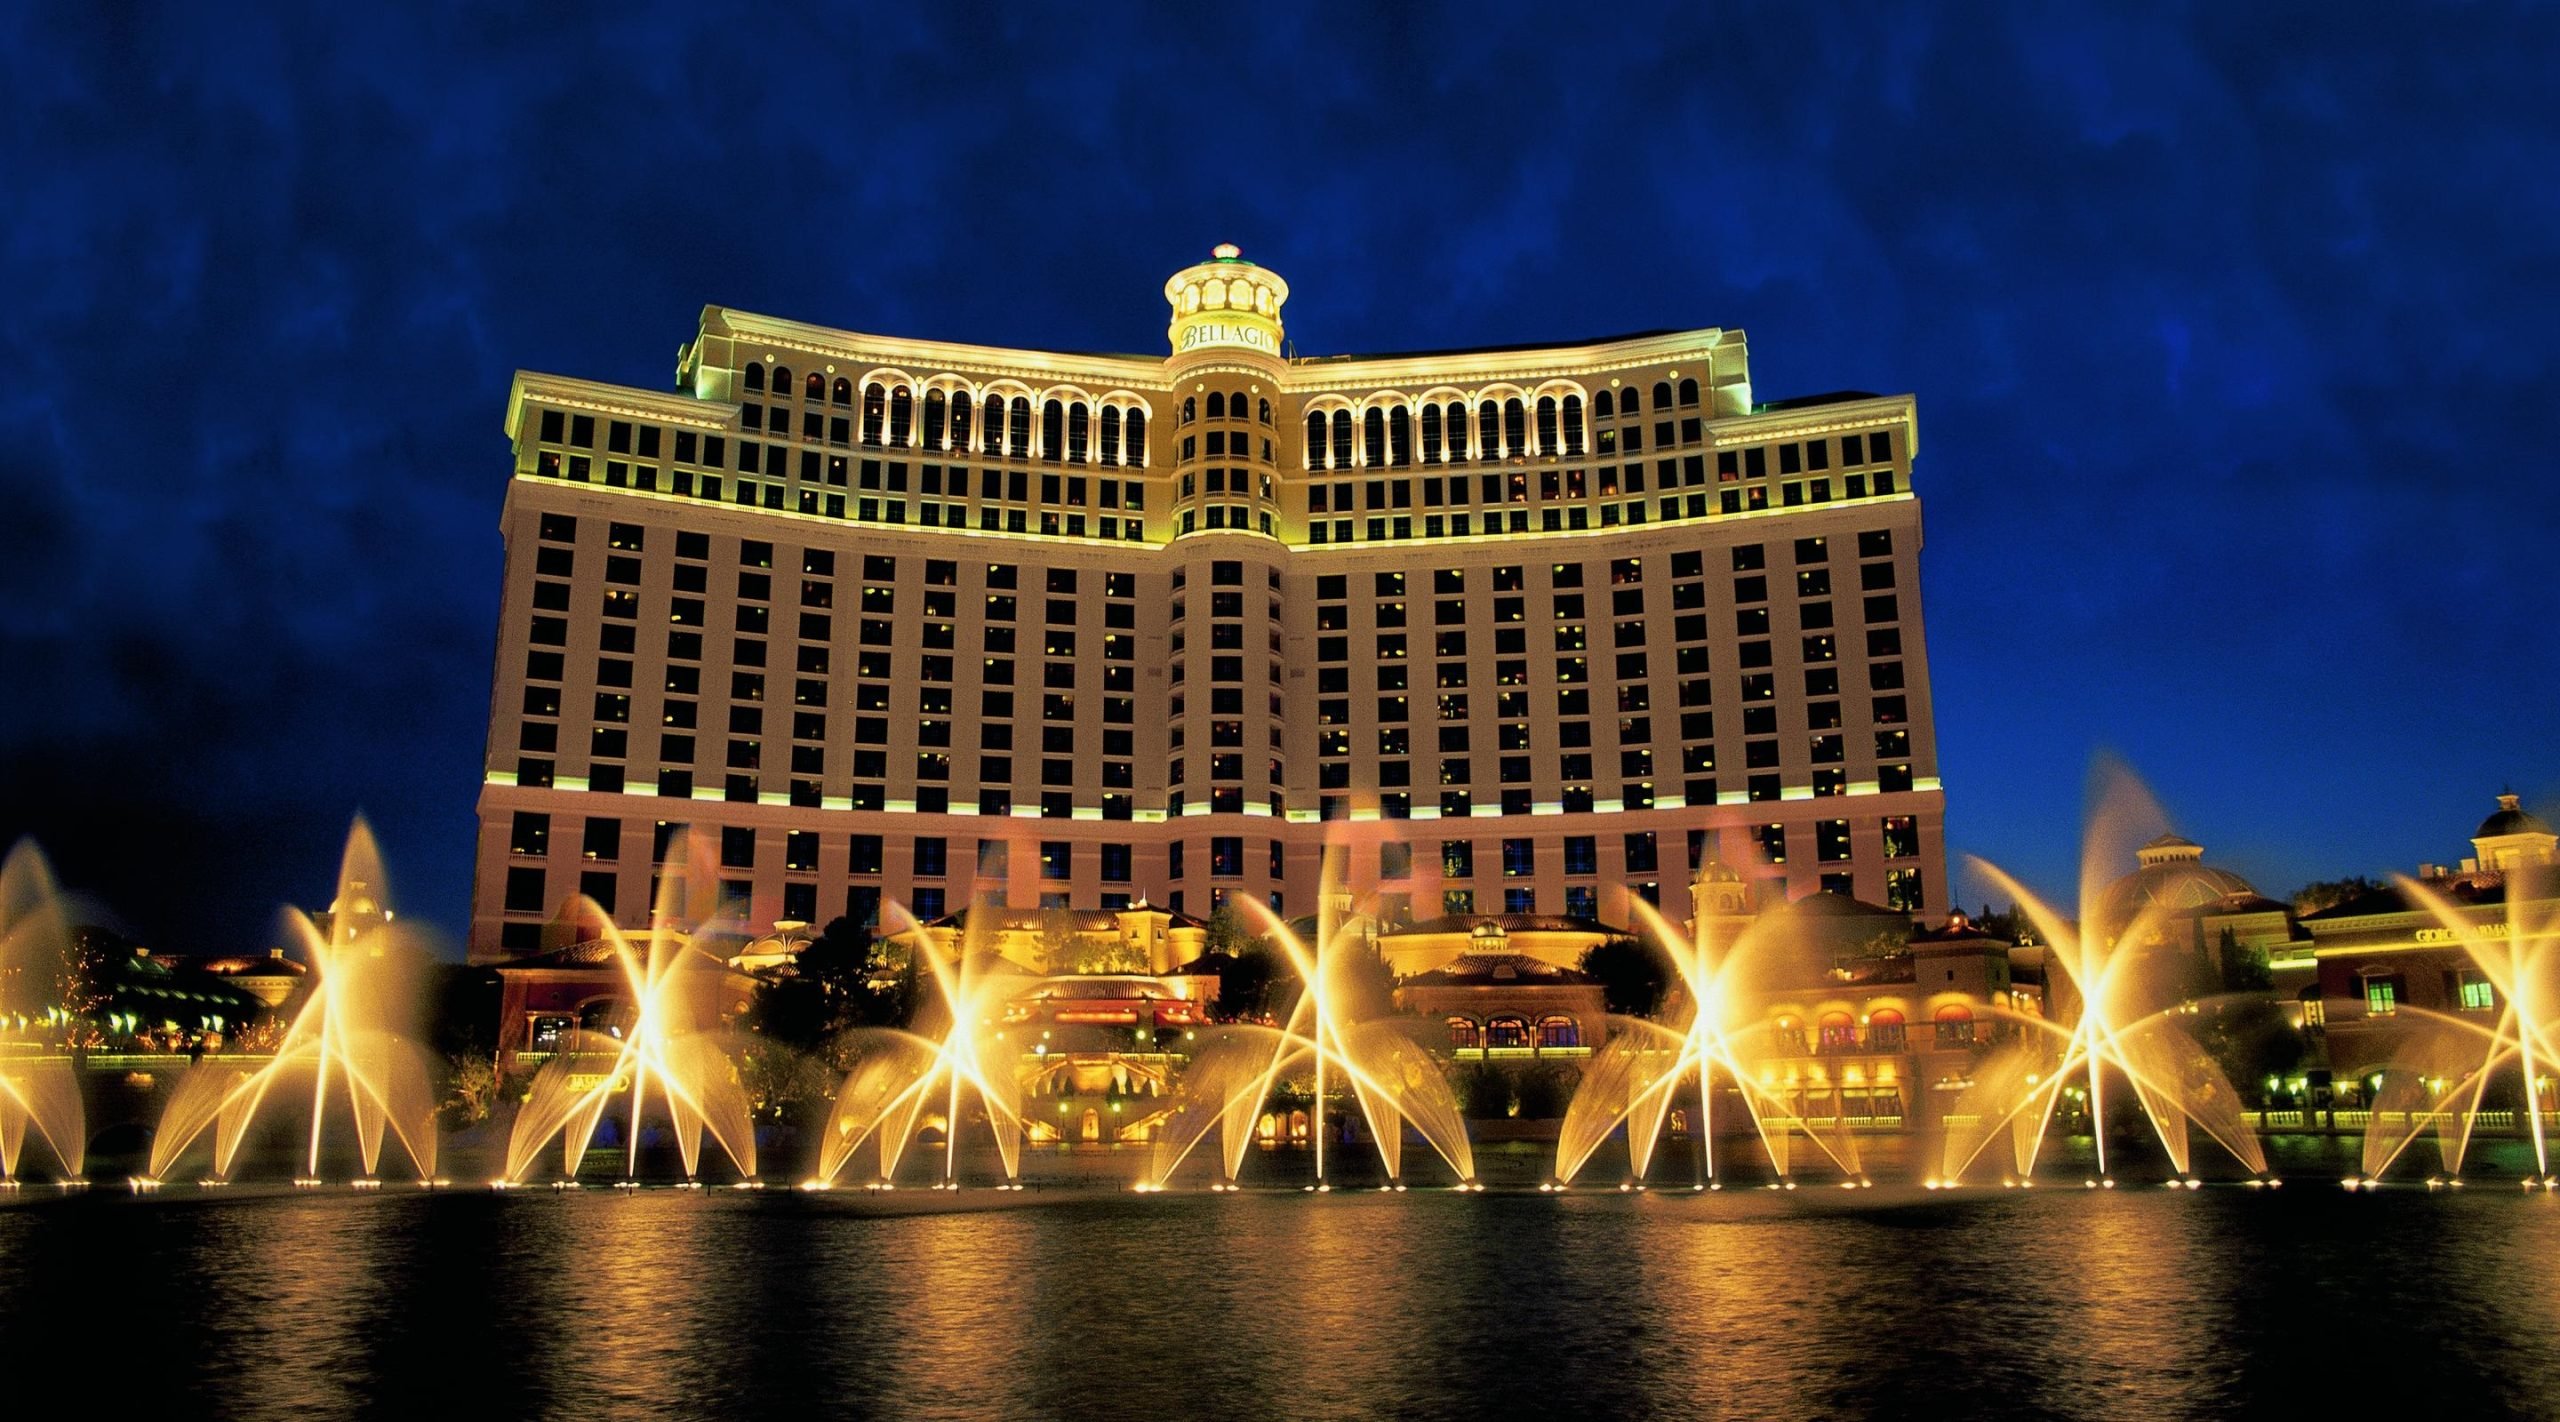 Bellagio Las Vegas Ranked No. 1 Casino